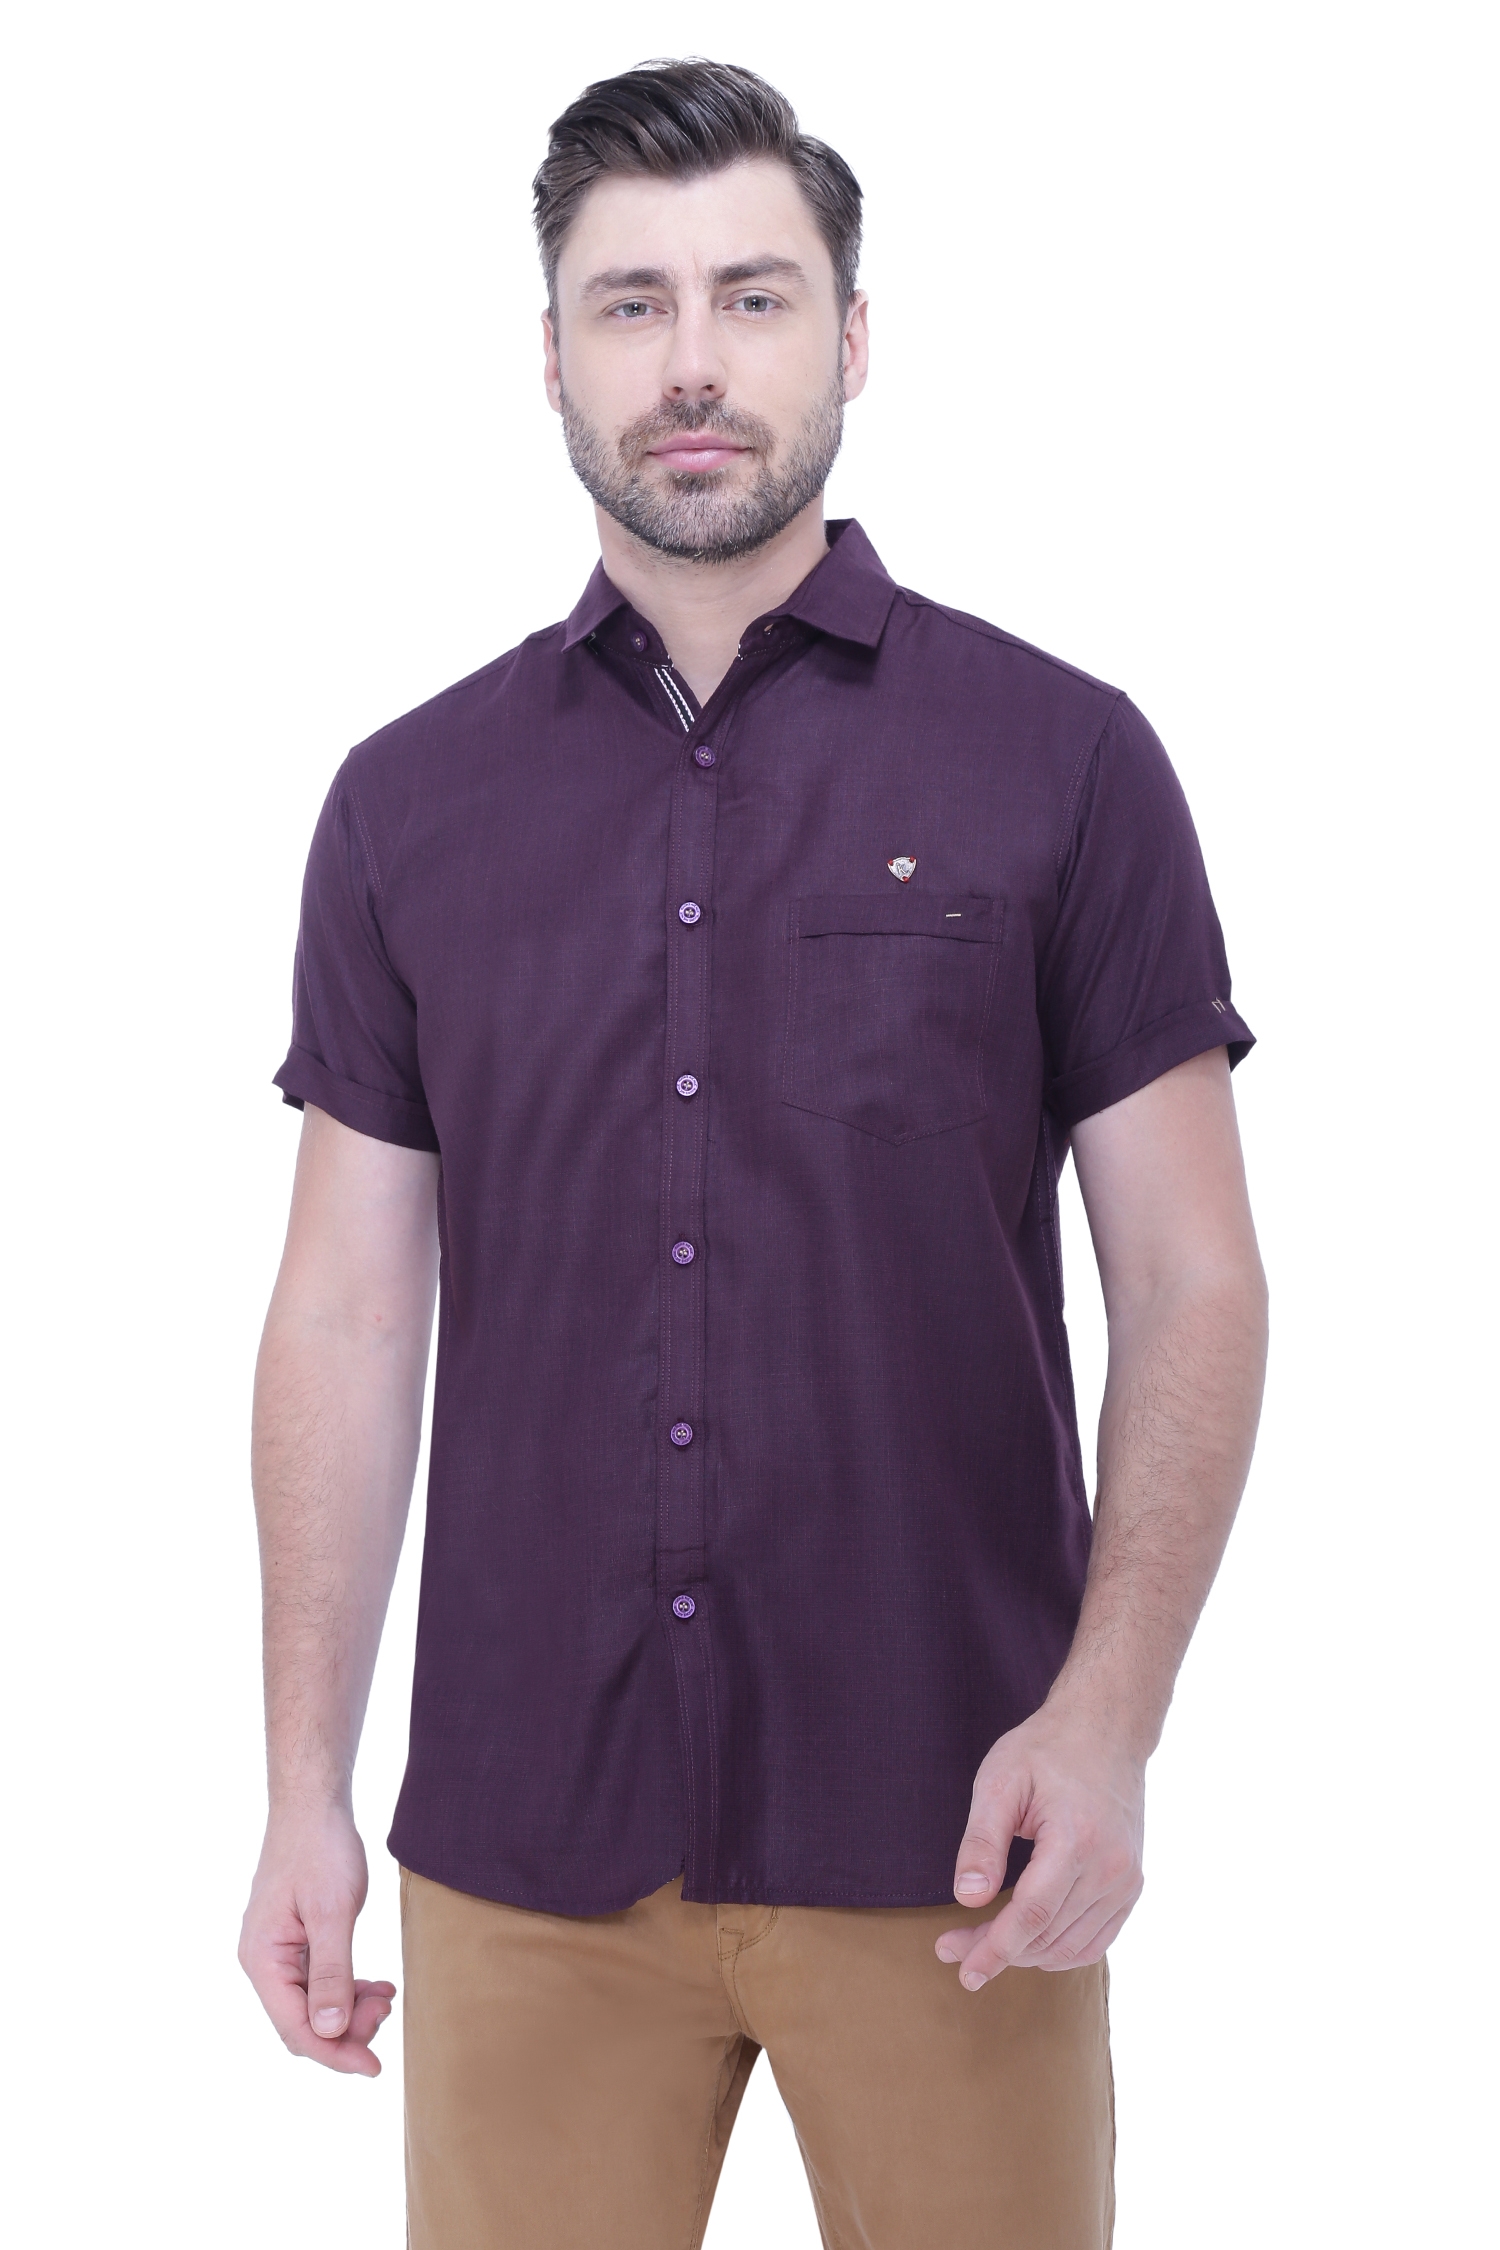 Kuons Avenue | Kuons Avenue Men's Linen Blend Half Sleeves Casual Shirt-KACLHS1229